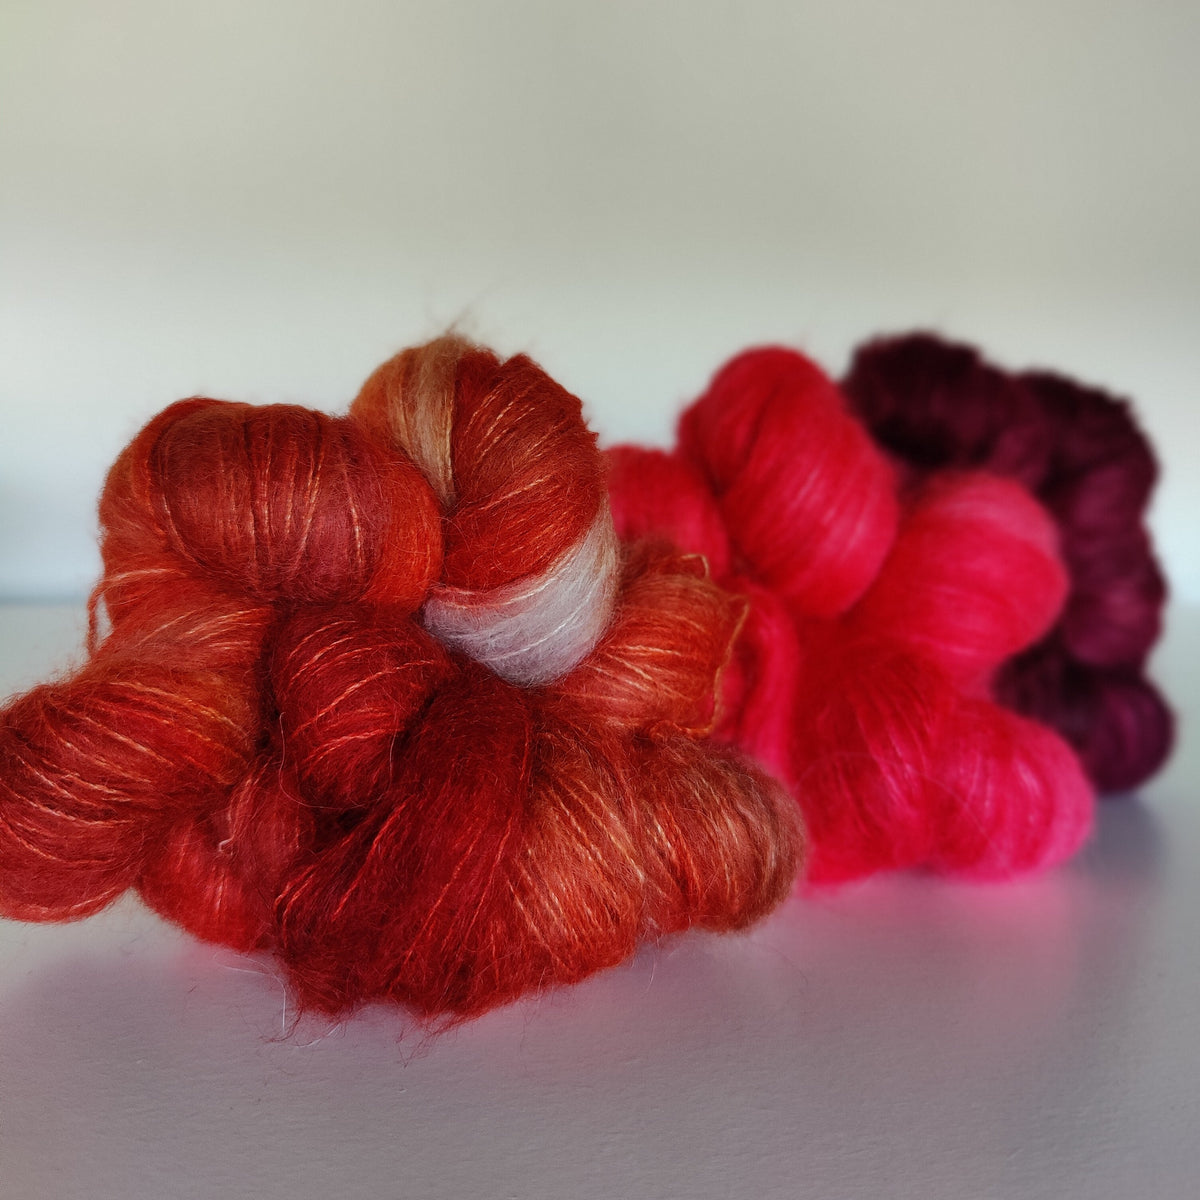 Sweet Pea Suri Alpaca/Mulberry Silk by Botanical Yarn - Woolly&Co.